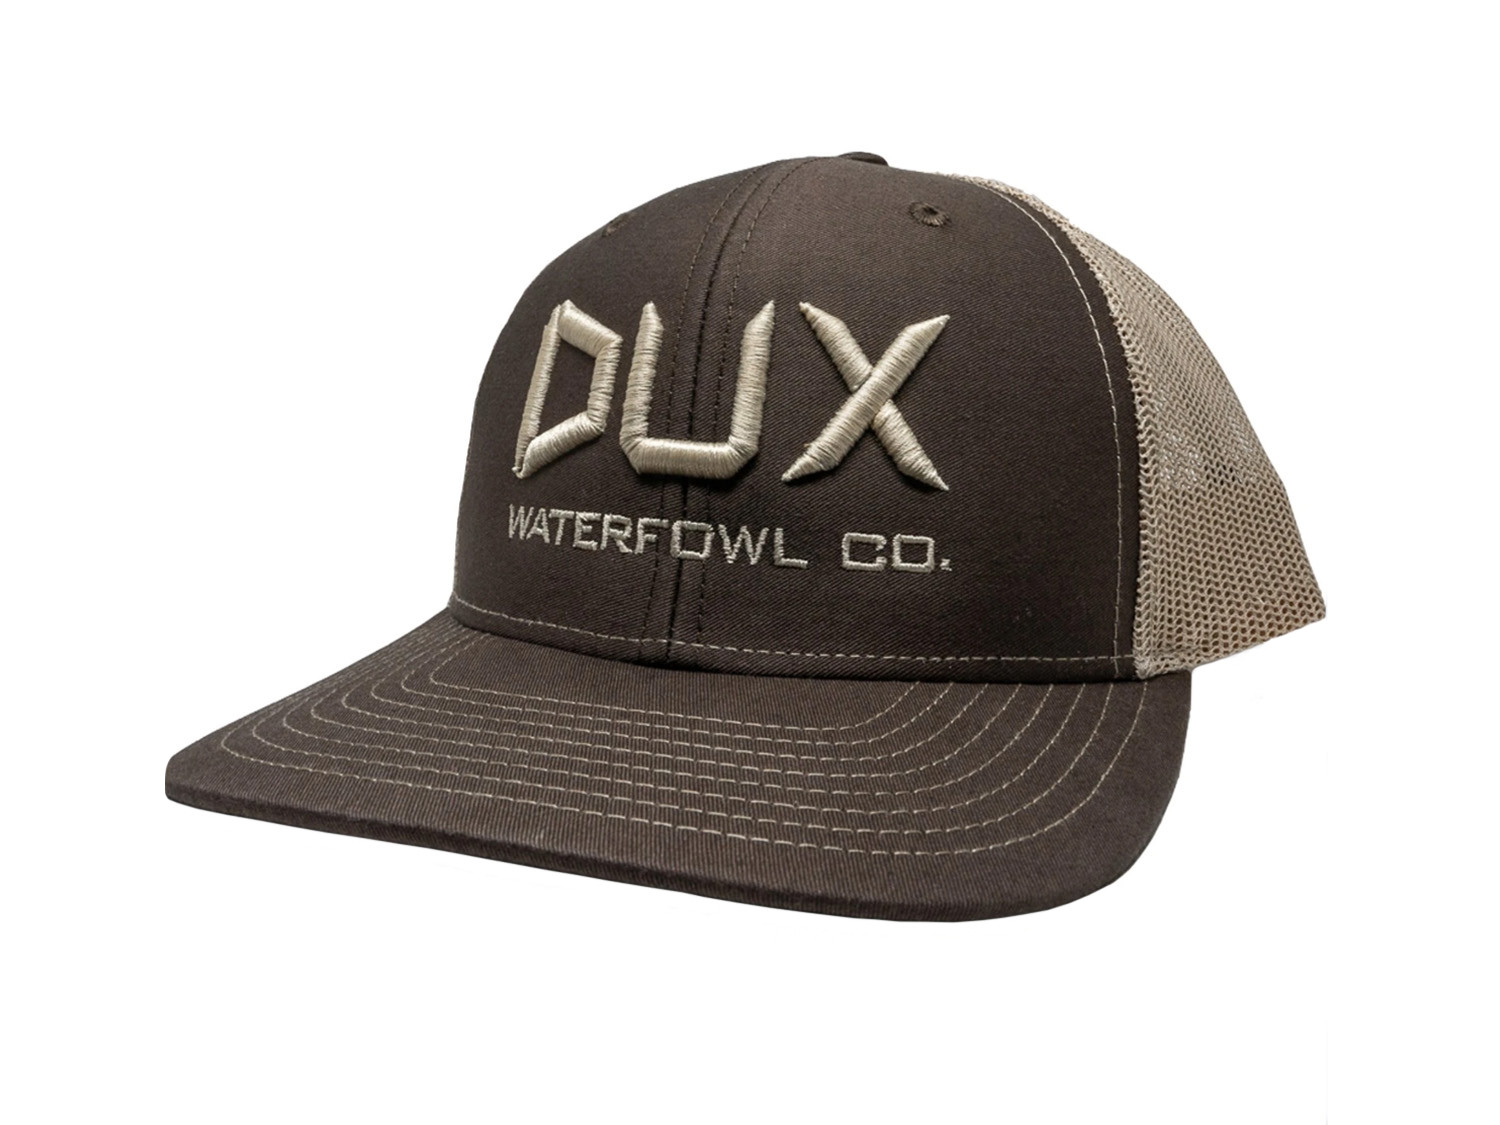 DUX Waterfowl Co. Hat | Karl’s Bait & Tackle